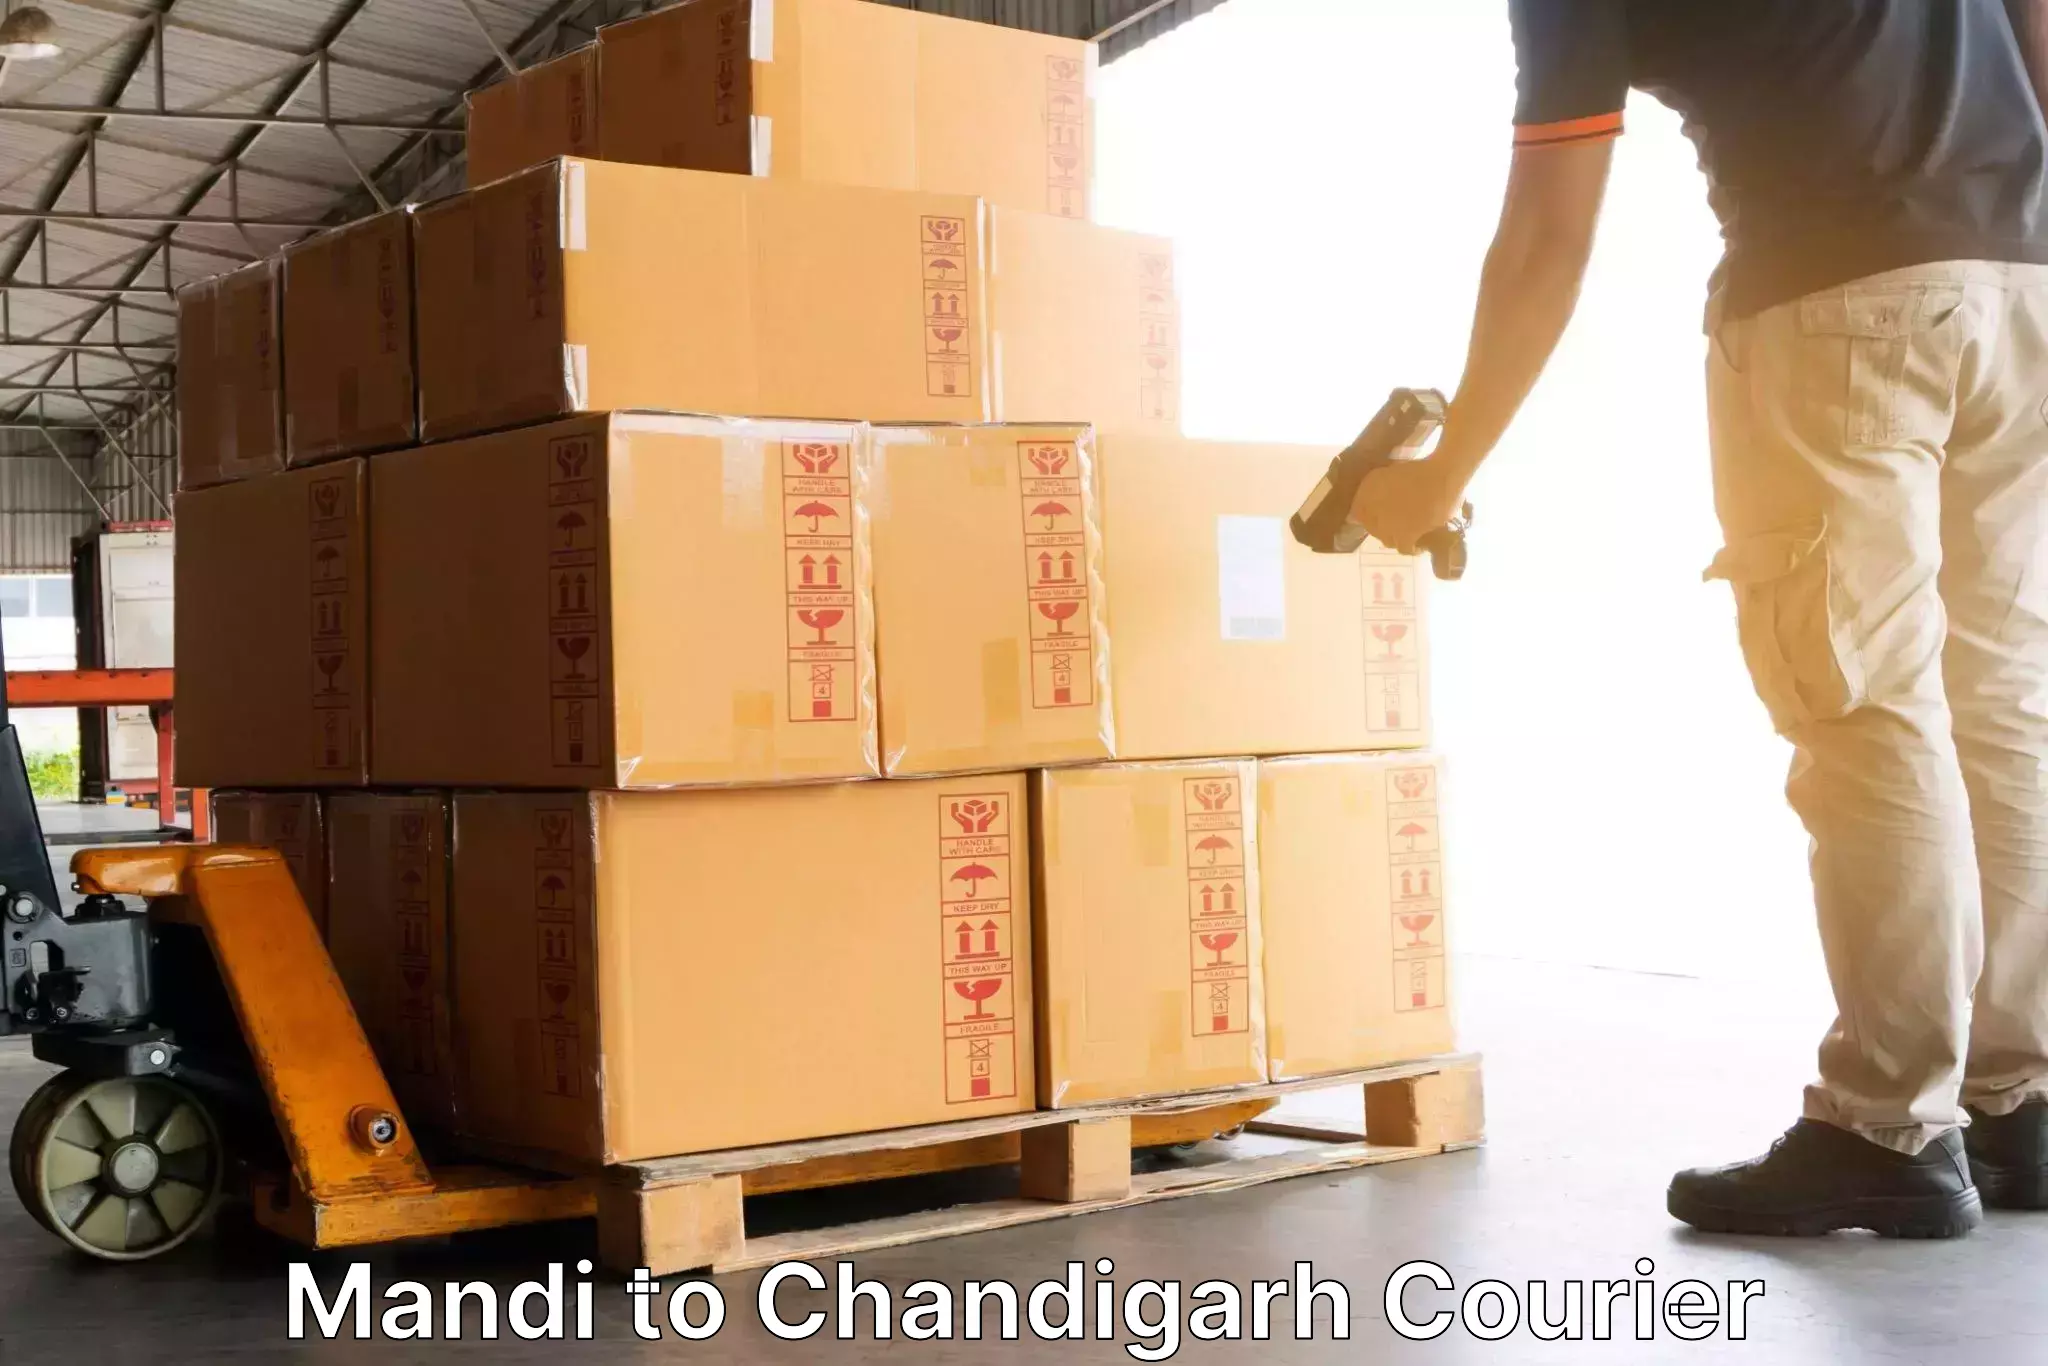 Customer-centric shipping Mandi to Chandigarh